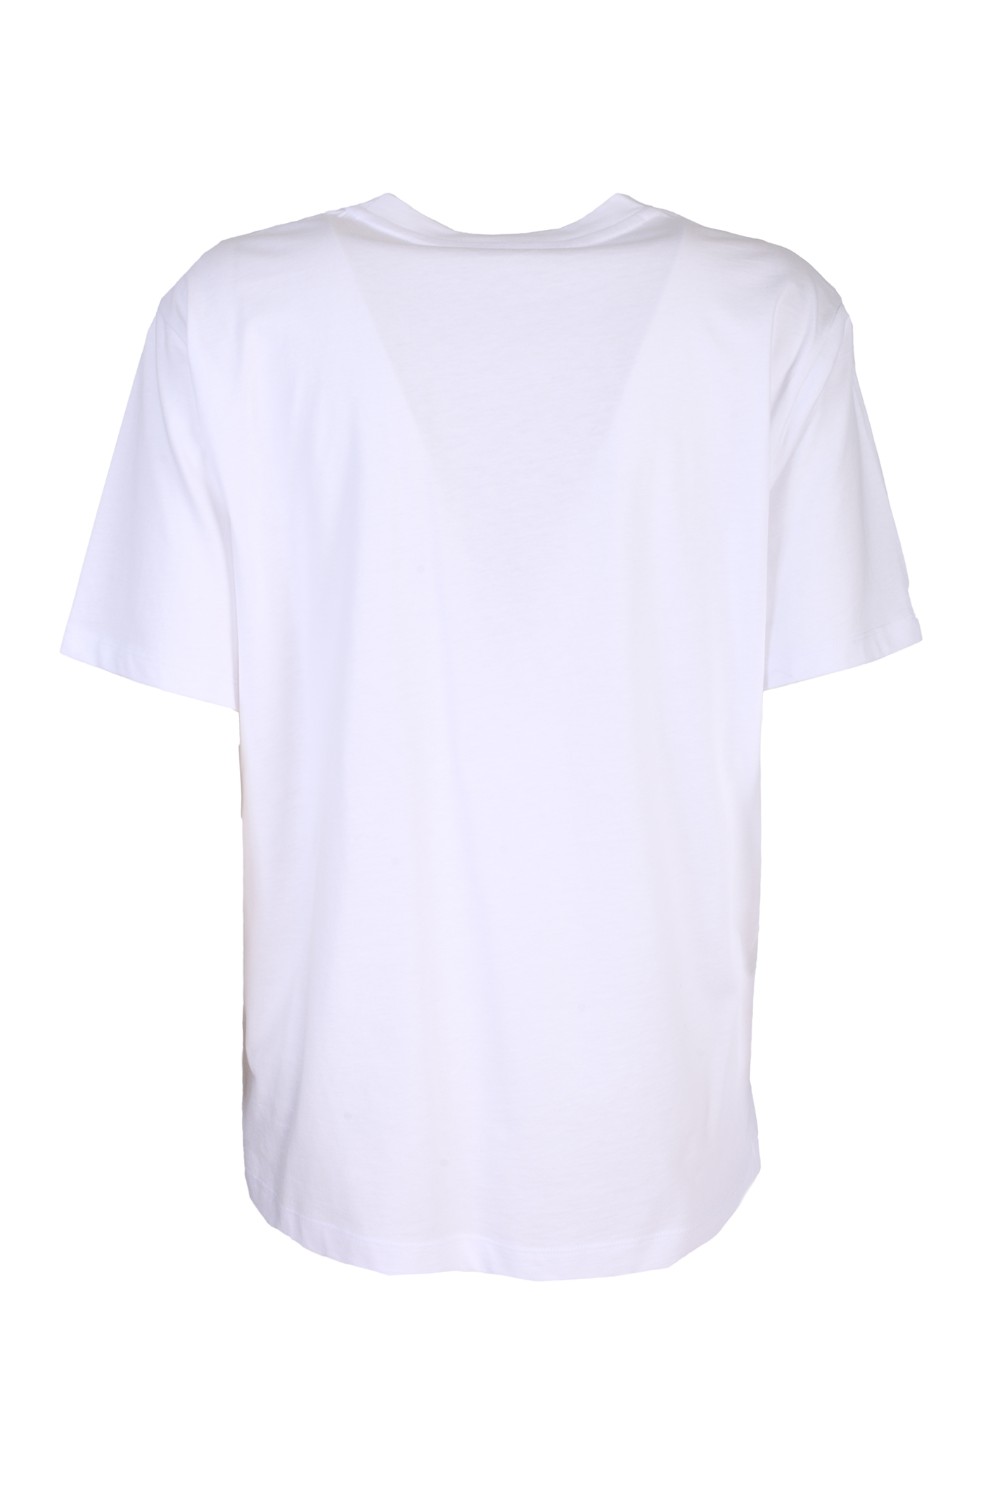 shop MICHAEL KORS Saldi T-shirt: Michael Kors t-shirt bianca.
Cotone mezza manica.
Logo e scritta nero su fondo bianco.. MH95MB897J-100 number 5077464